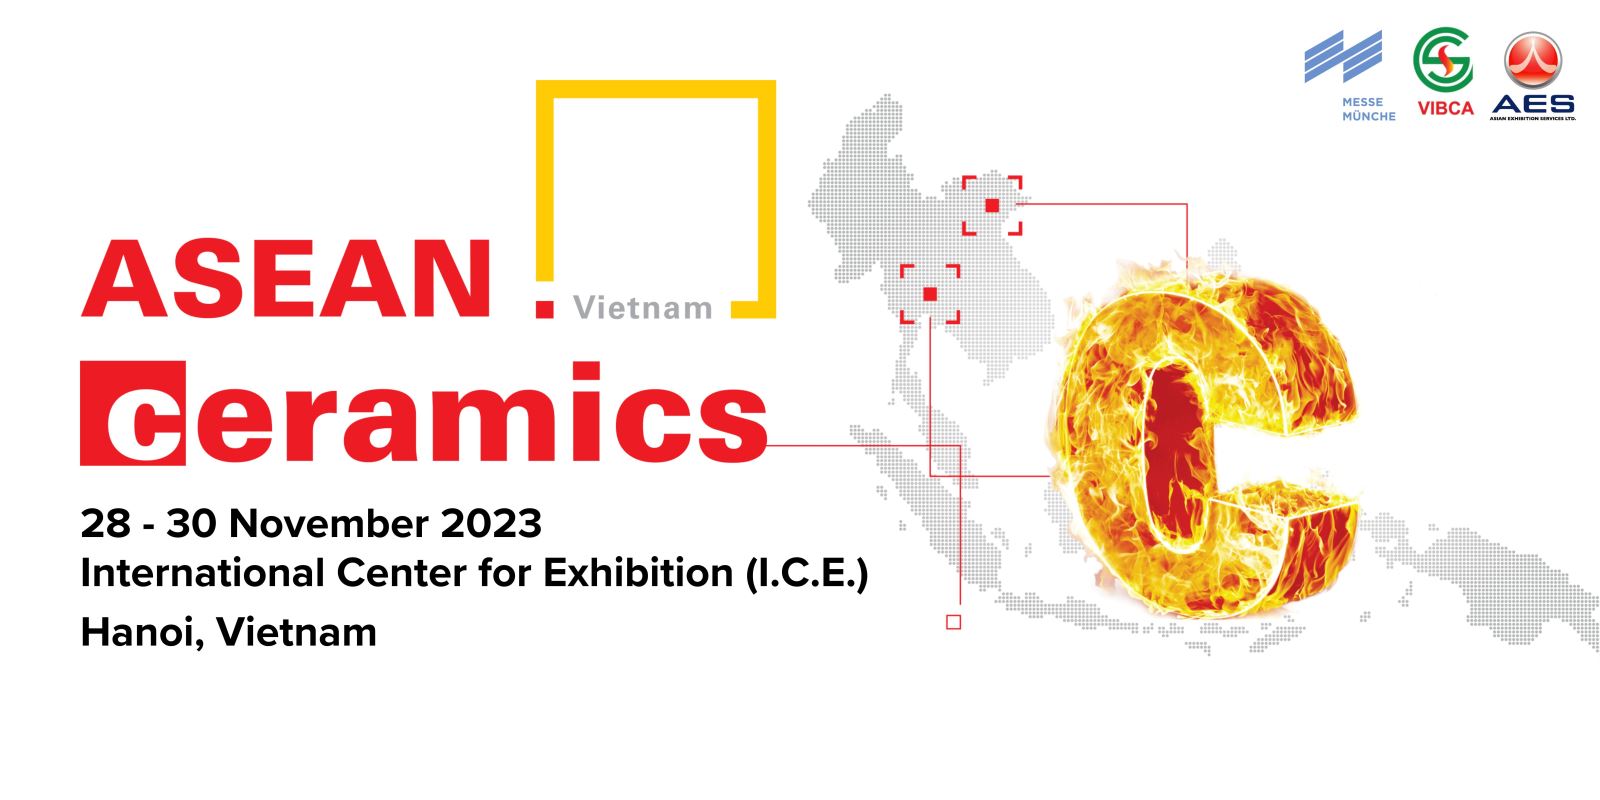 Triển lãm Asean Ceramics 2023 Hà Nội Việt Nam